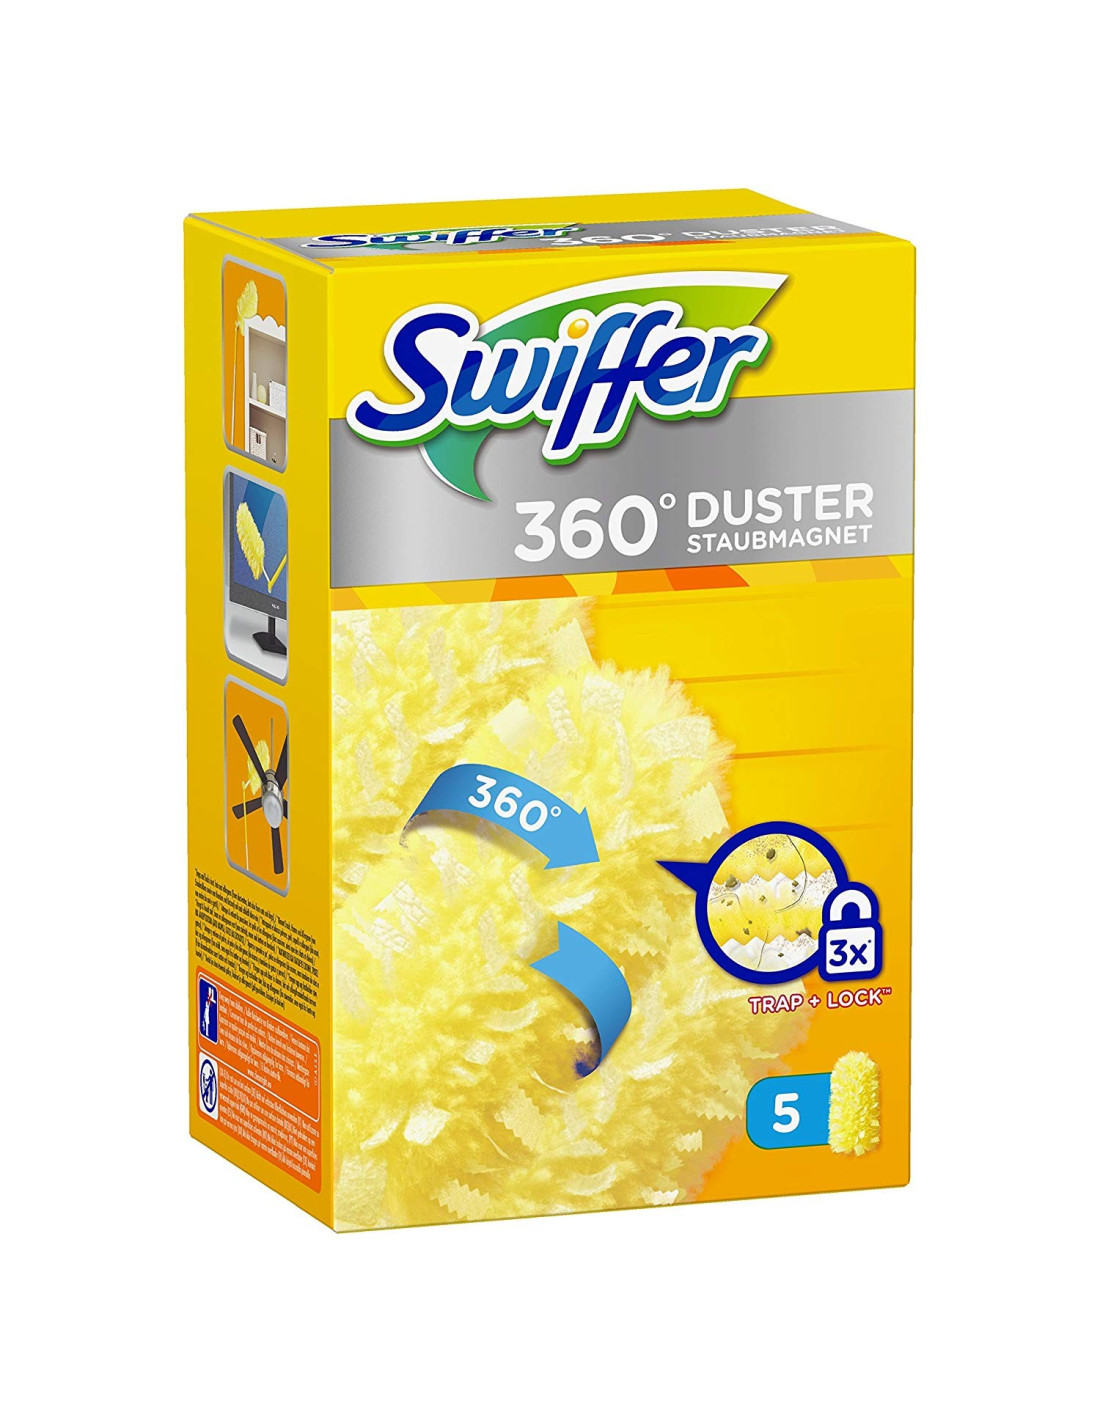 Swiffer Duster XXL Ricarica 8 pezzi